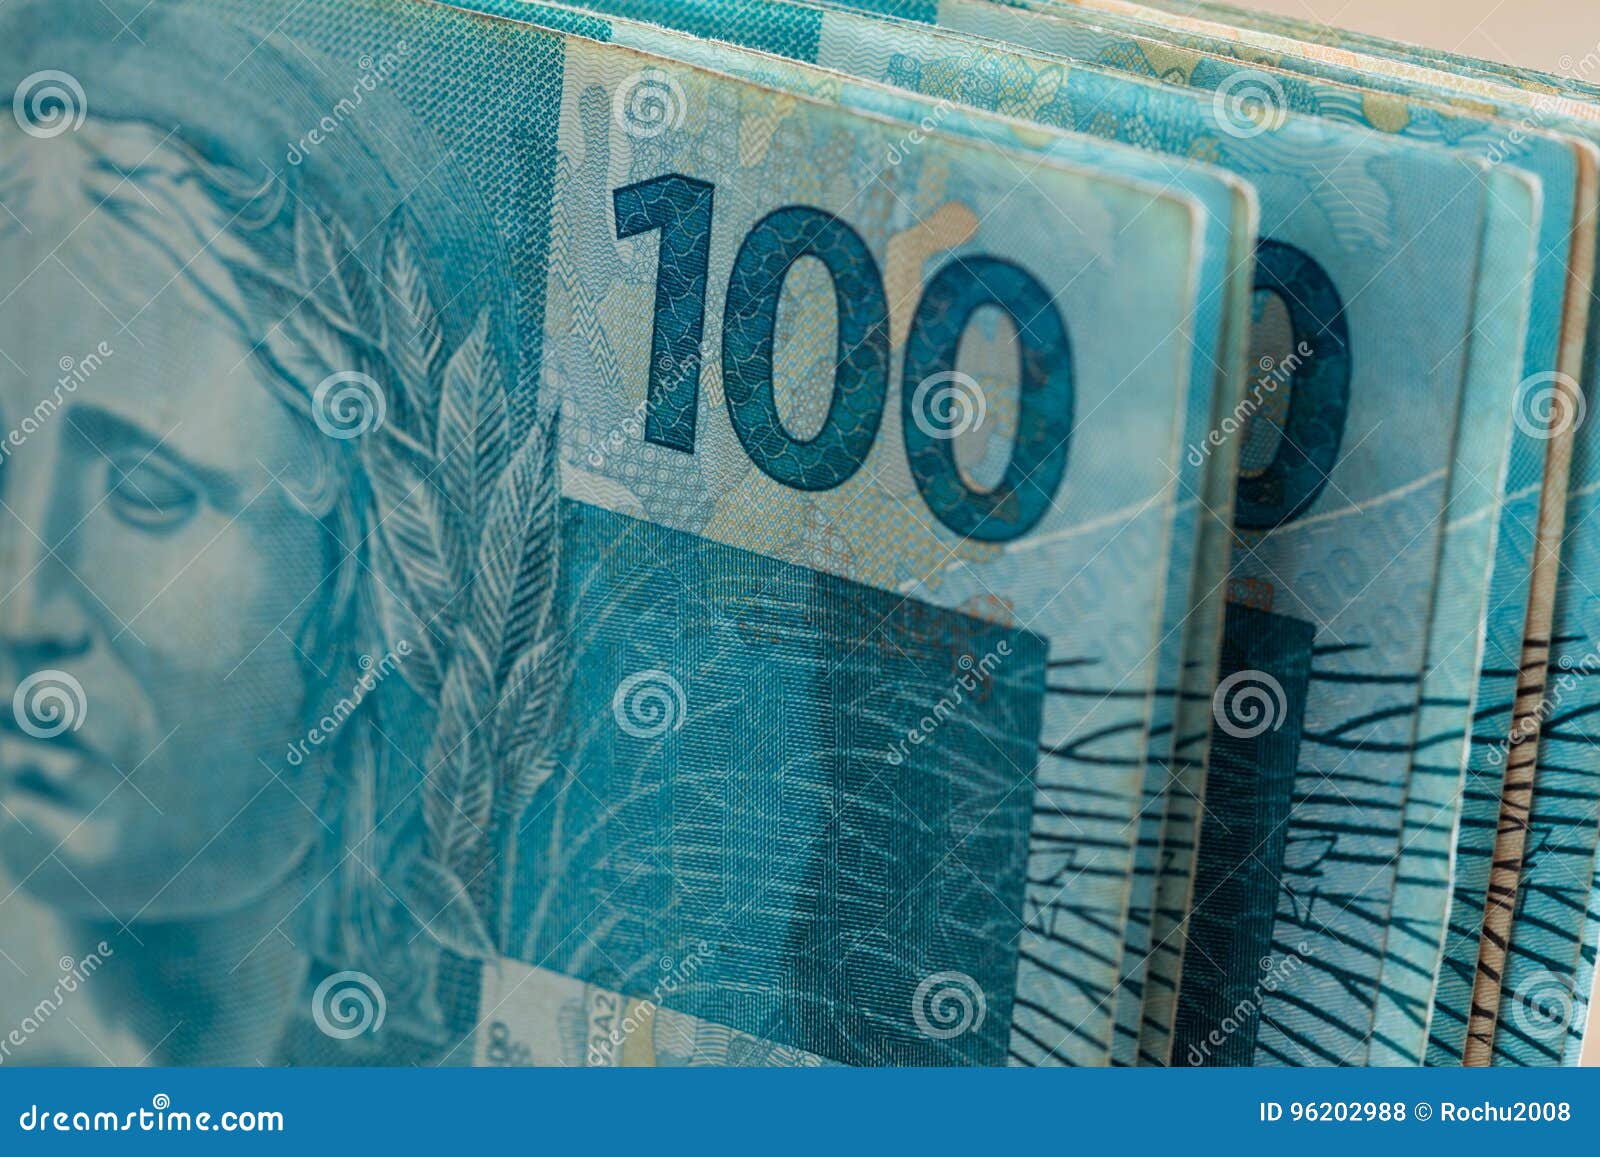 view of the brazilian money, reais, high nominal